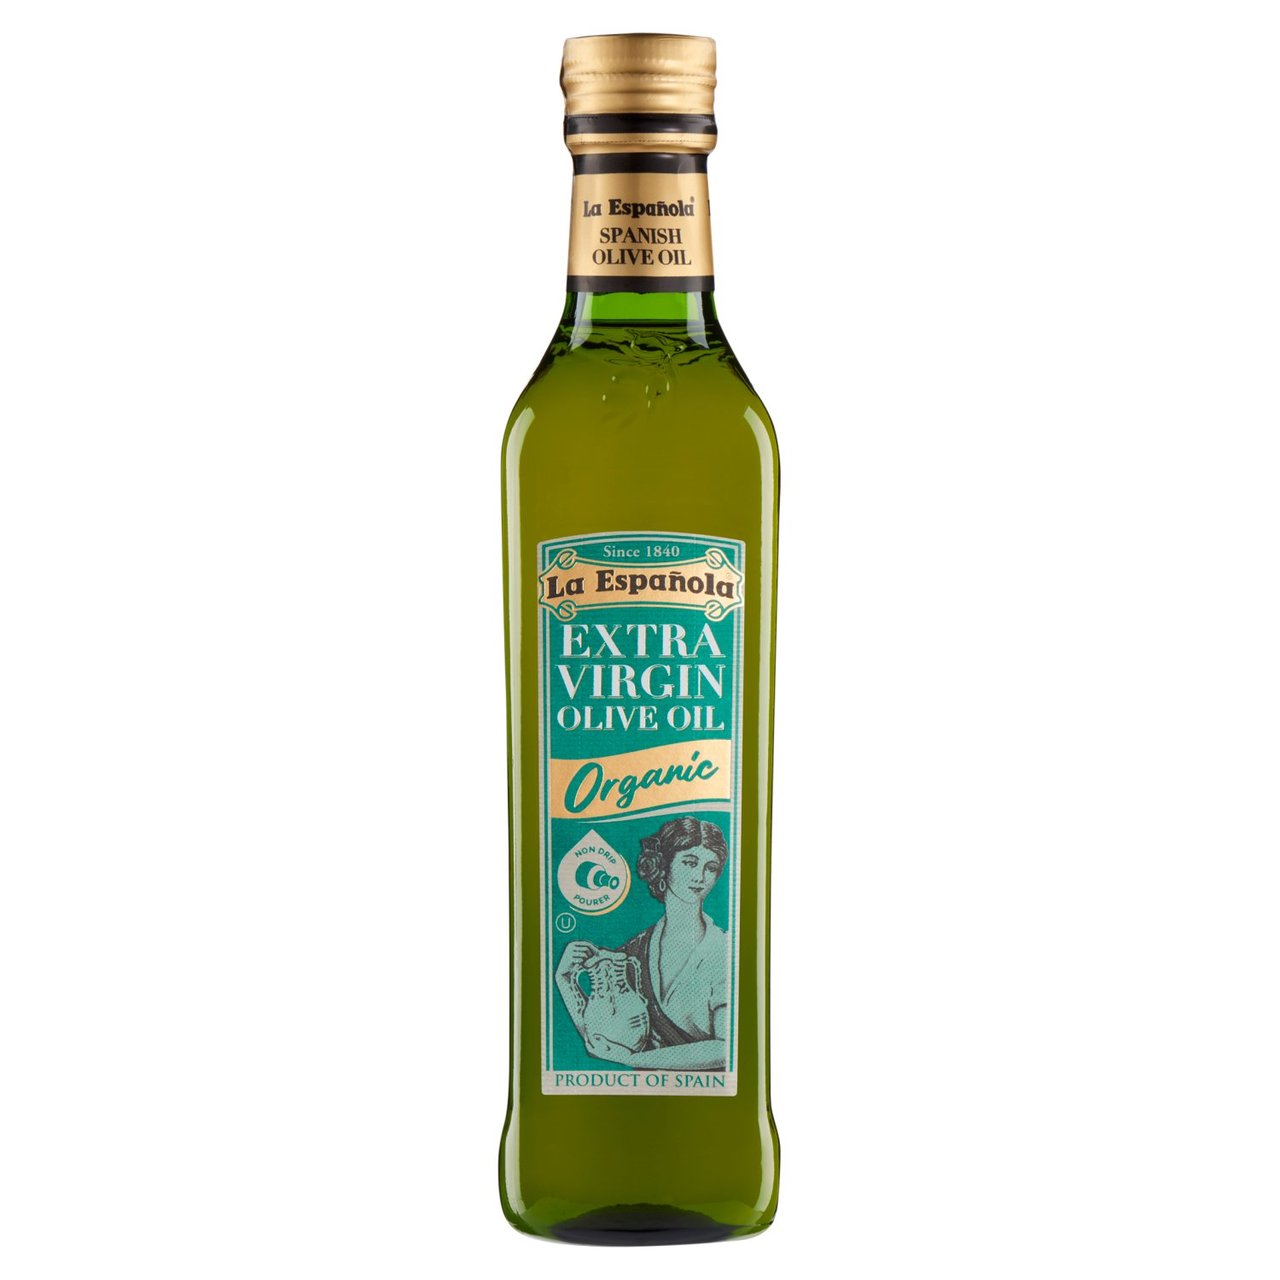 La Espanola Organic Extra Virgin Olive Oil